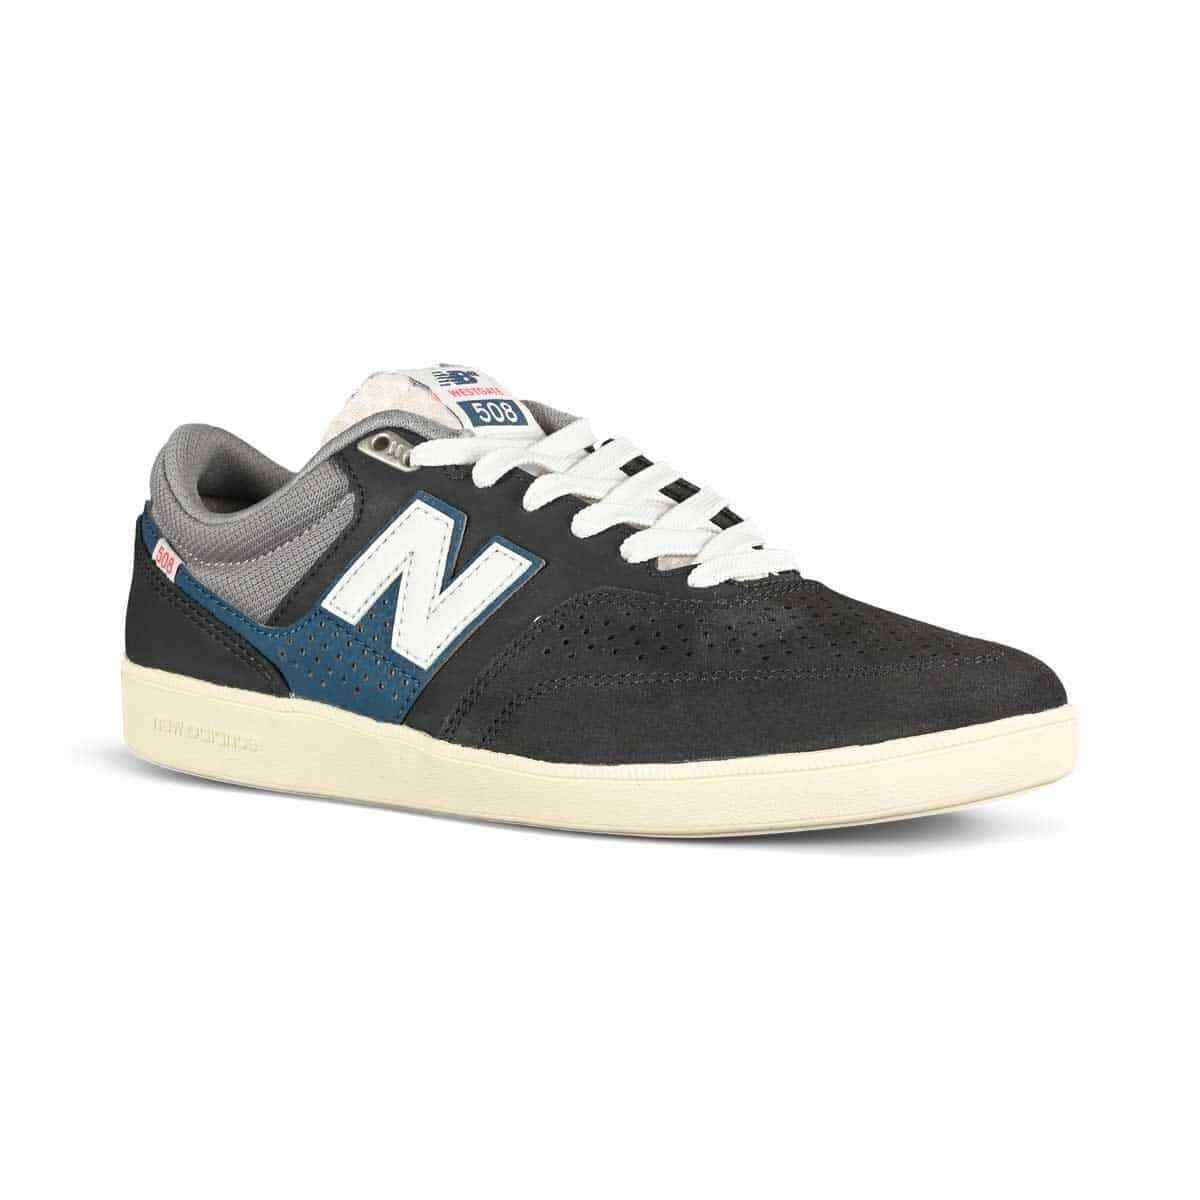 New Balance Numeric 508 Shoes Dark Grey Blue